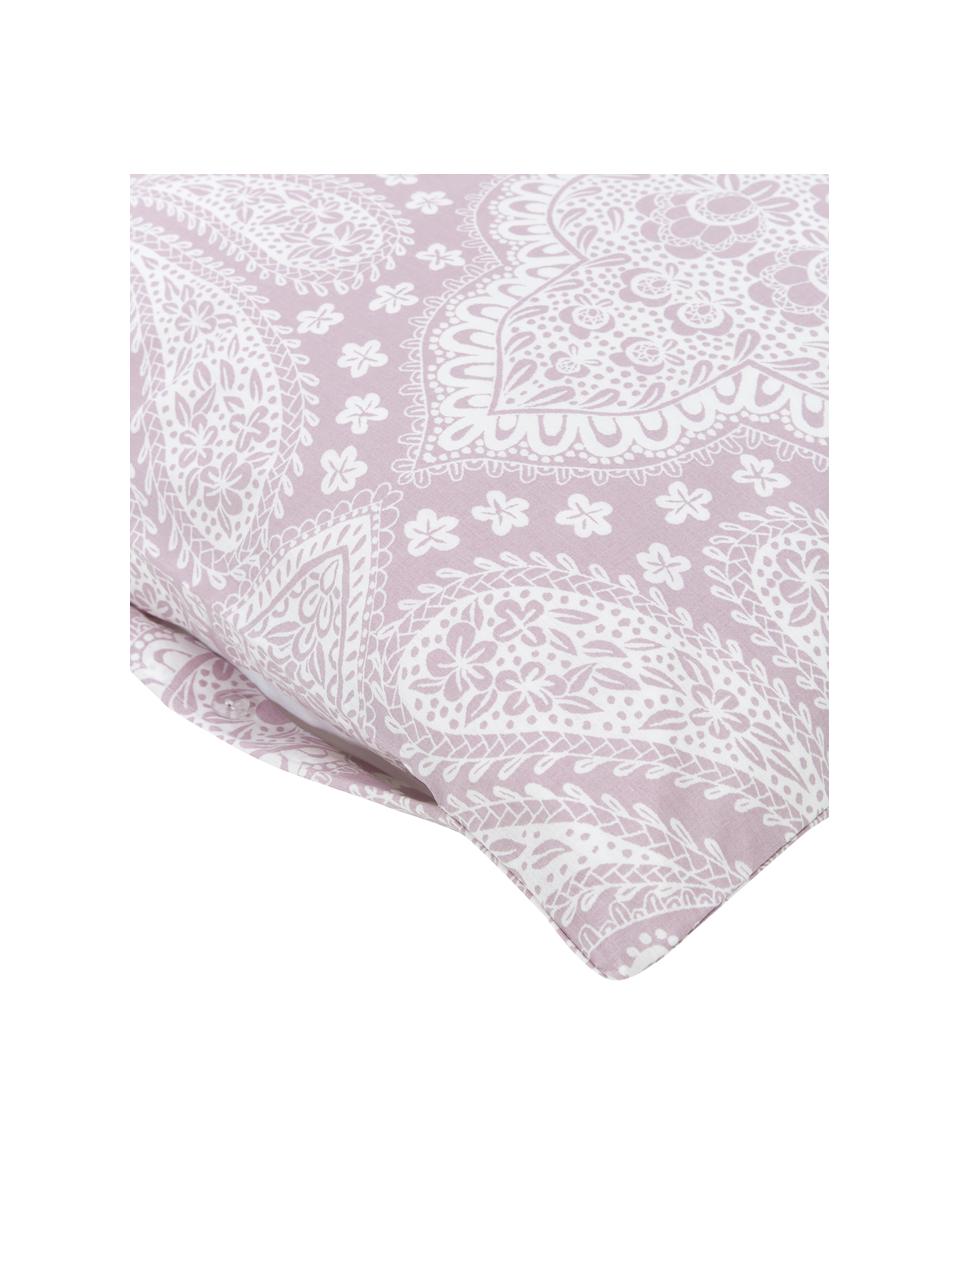 Fundas de almohada de algodón ecológico tejido renforcé Manon, 2 uds., Lila estampado, An 50 x L 70 cm